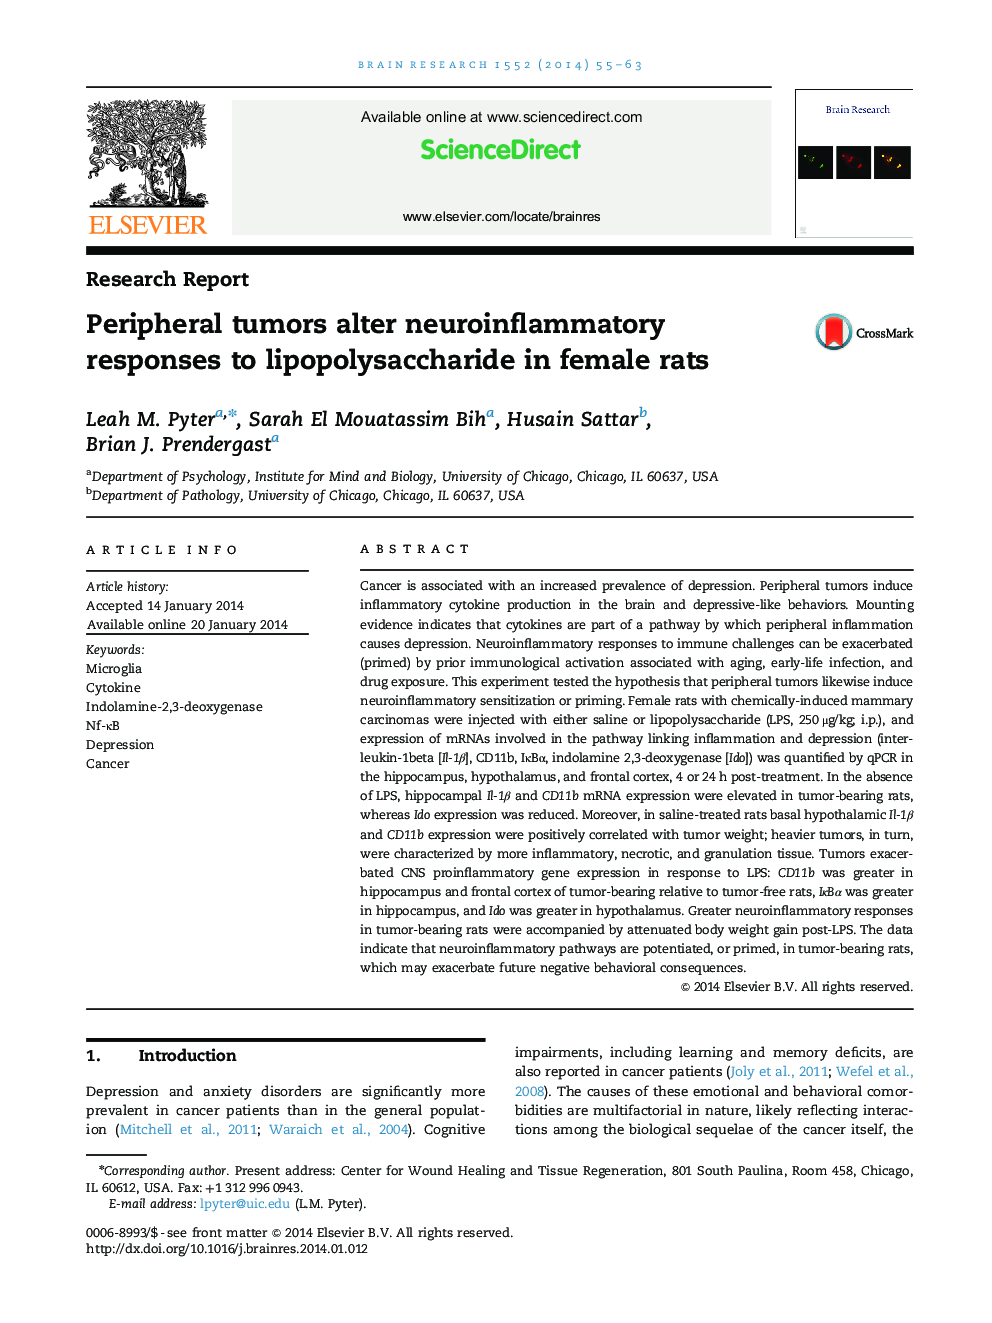 Peripheral tumors alter neuroinflammatory responses to lipopolysaccharide in female rats